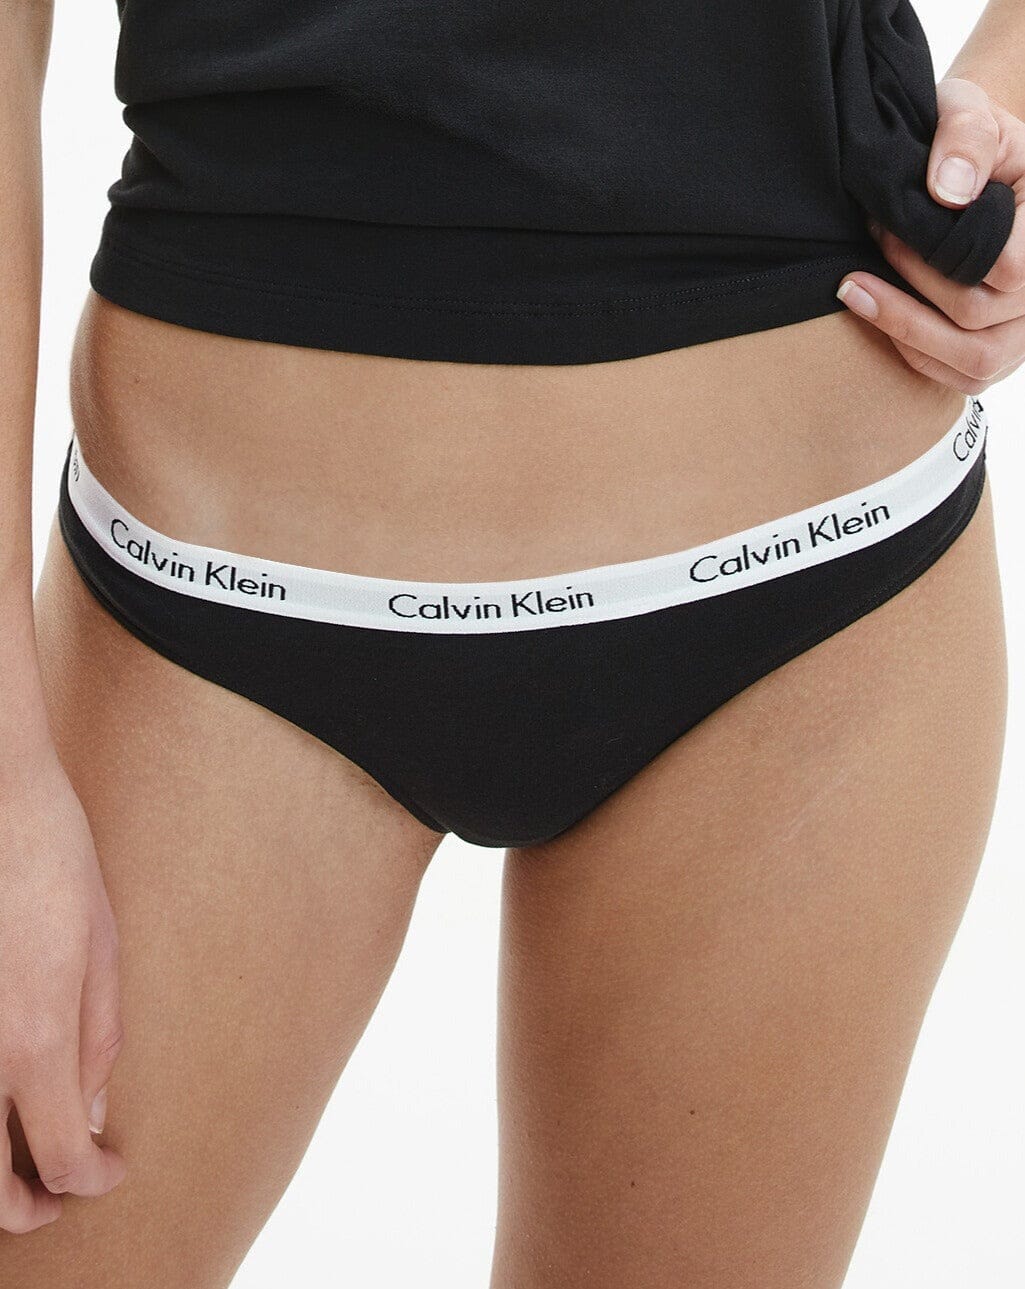 Calvin Klein Carousel 3 Pack Thong - Black/Grey Heather/White Knickers 